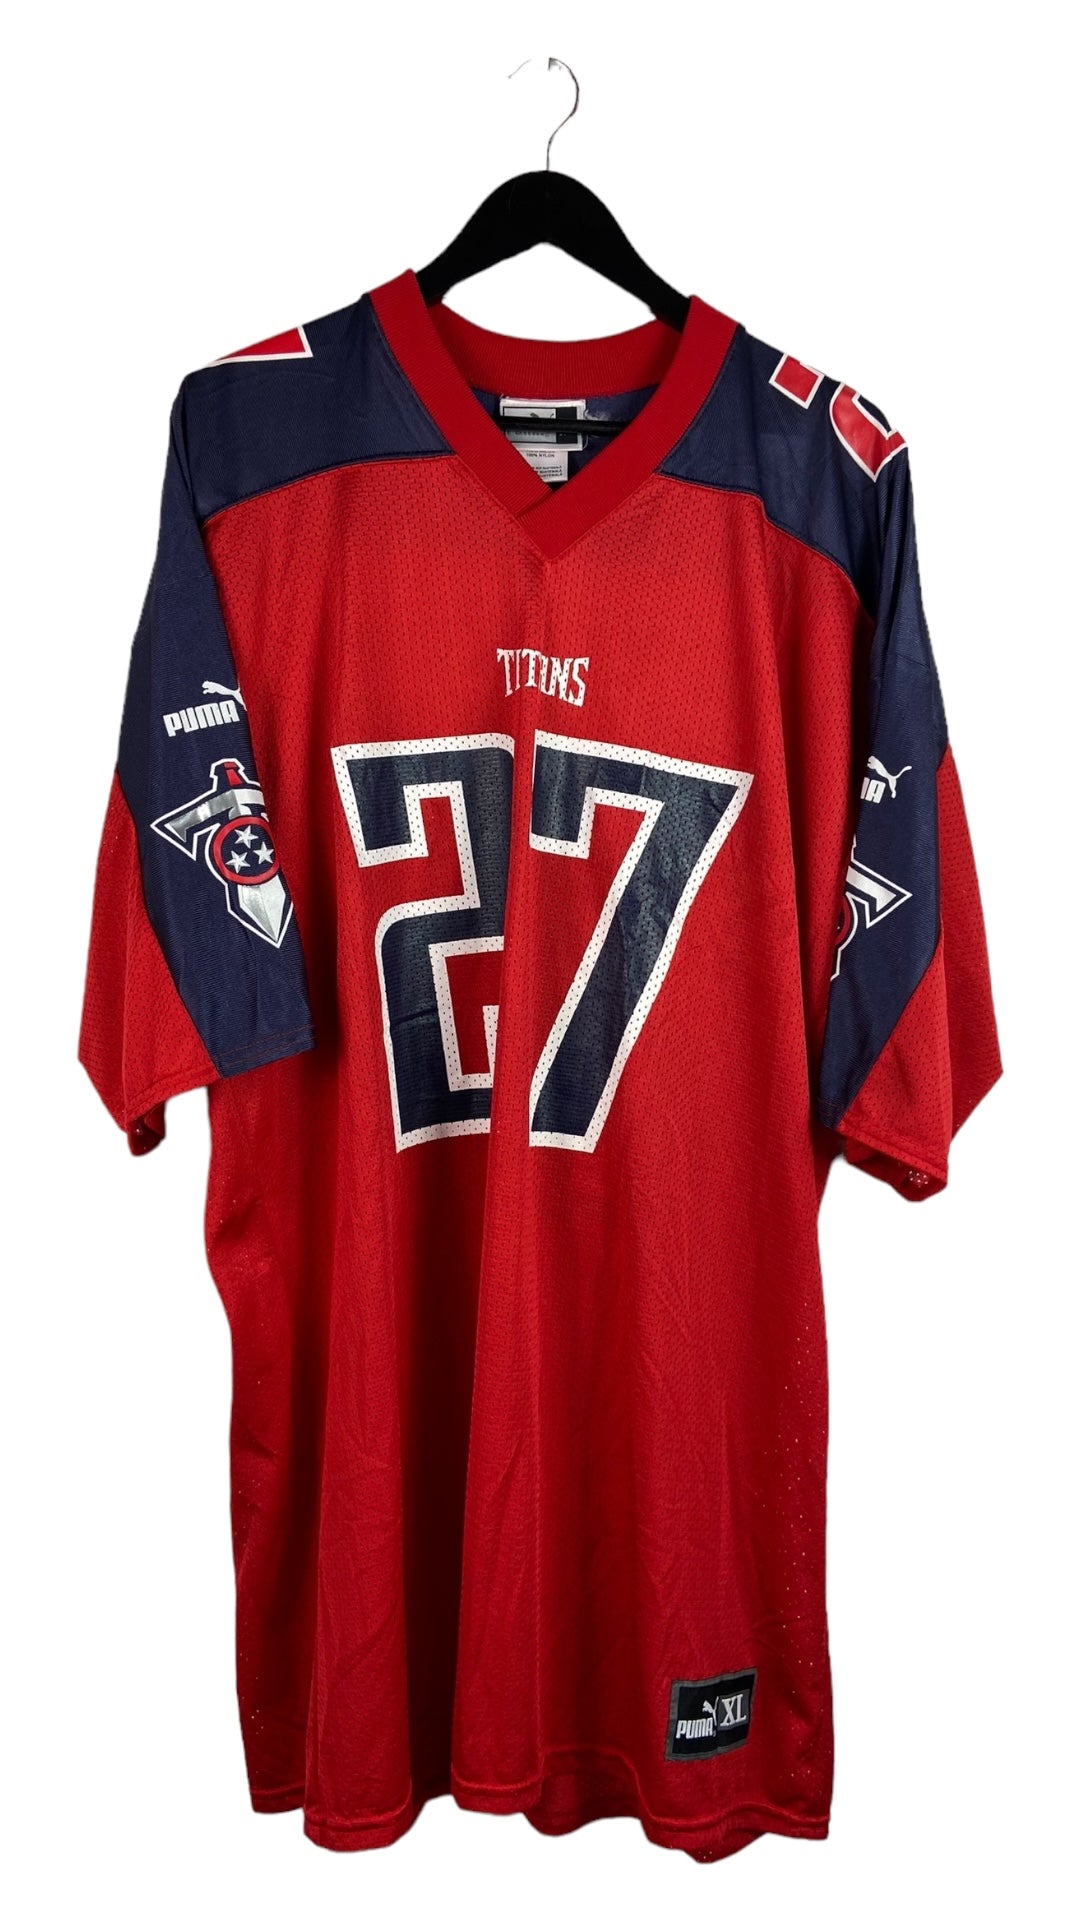 VTG Tennessee Titans Eddie George Red Puma Football Jersey Sz XL